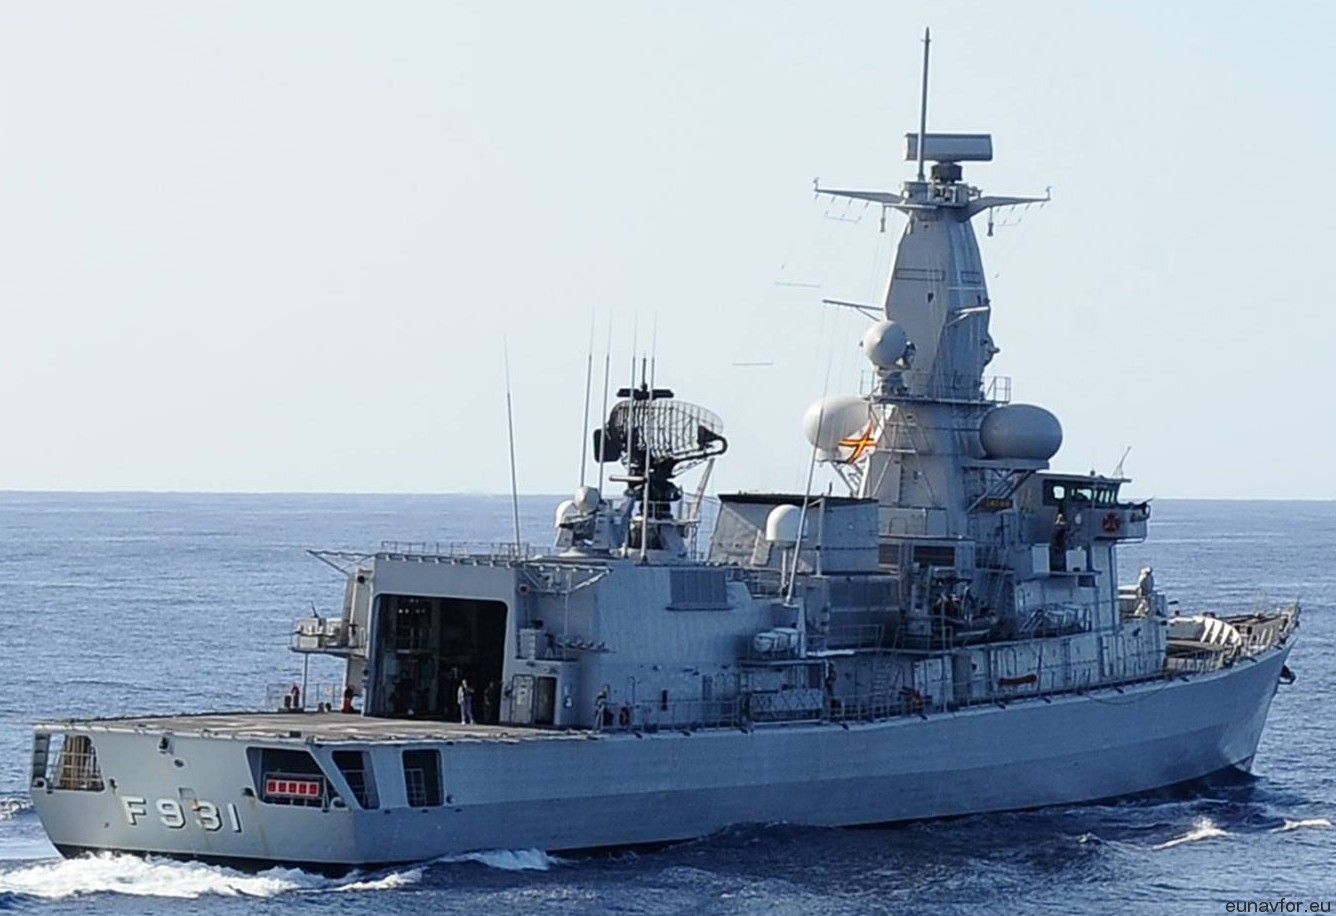 f-931 bns louise marie frigate belgian navy karel doorman class 07